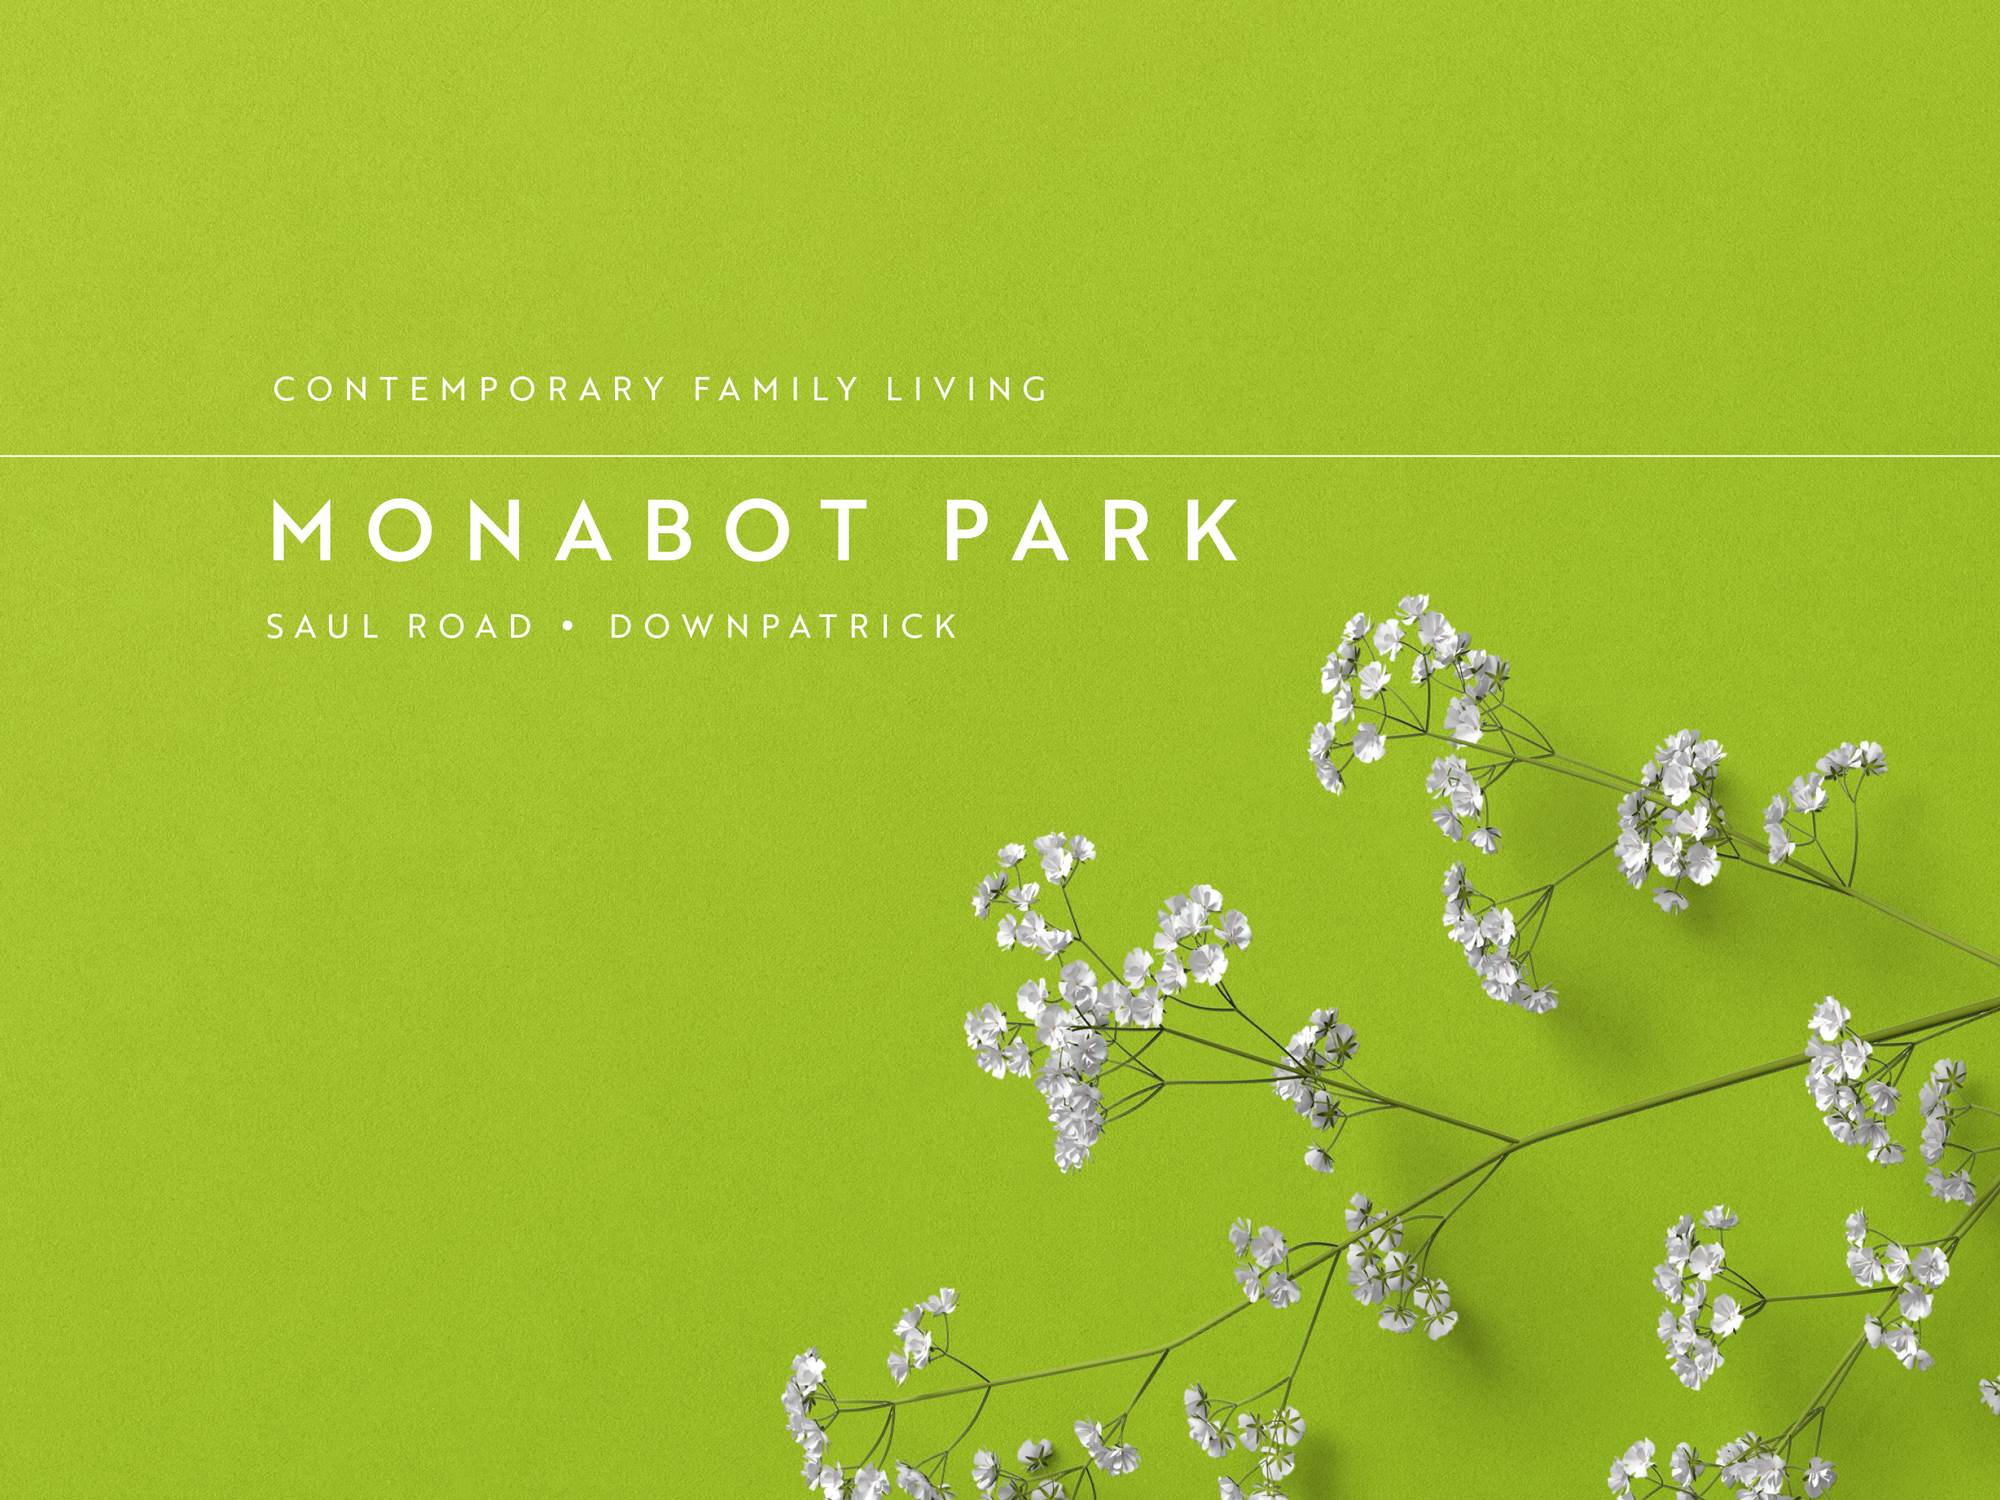 1 Monabot Park